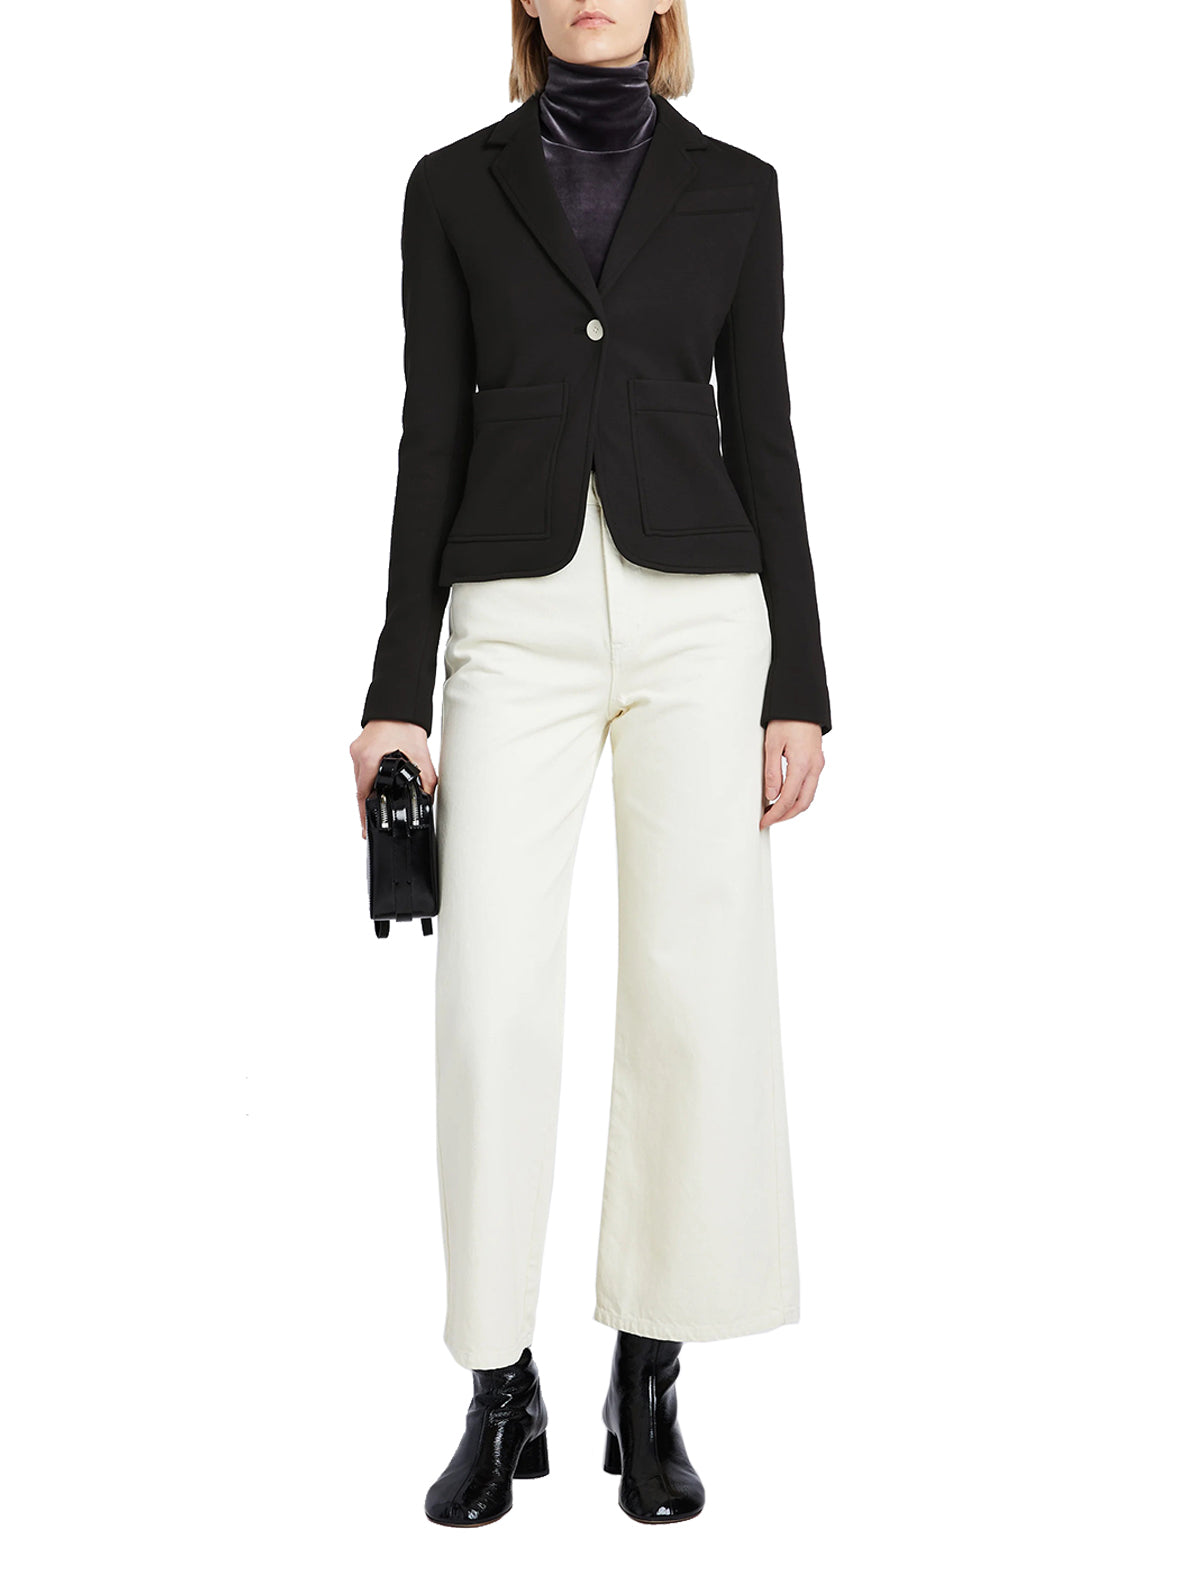 PROENZA SCHOULER WHITE LABEL Jersey Suiting Blazer in Black